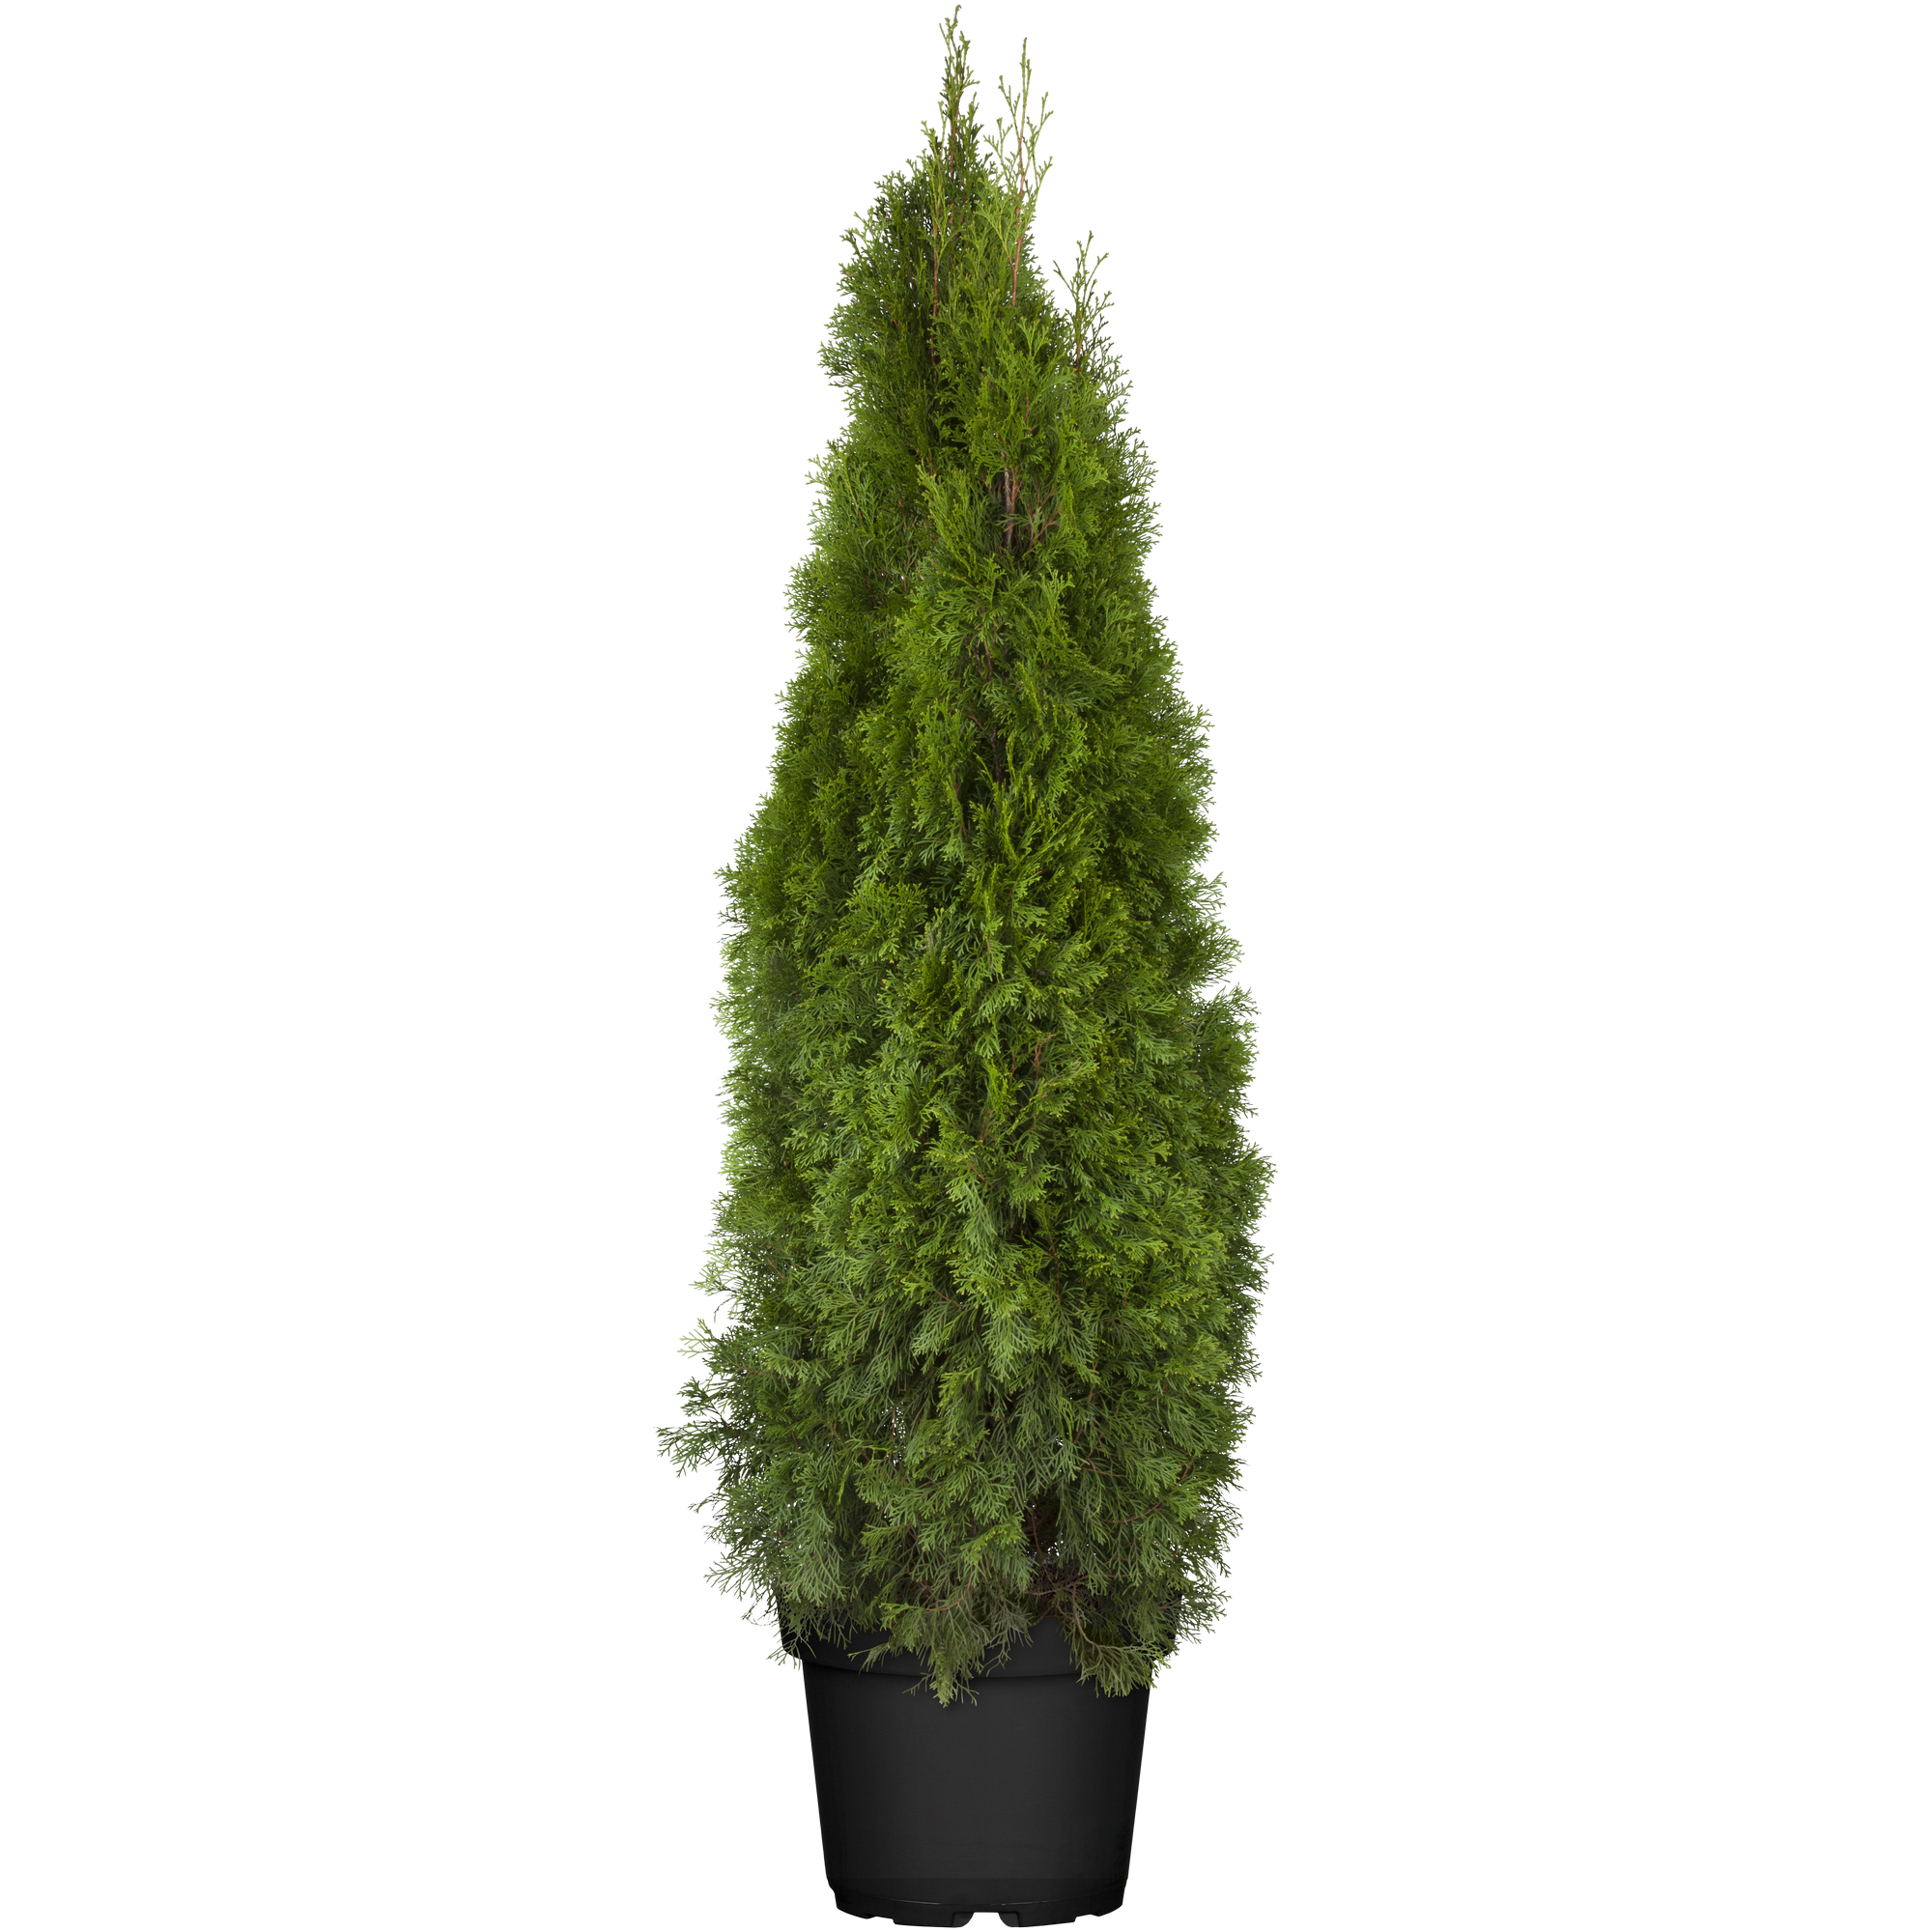 Lebensbaum 'Smaragd' 120-140 cm, 29 cm Topf + product picture